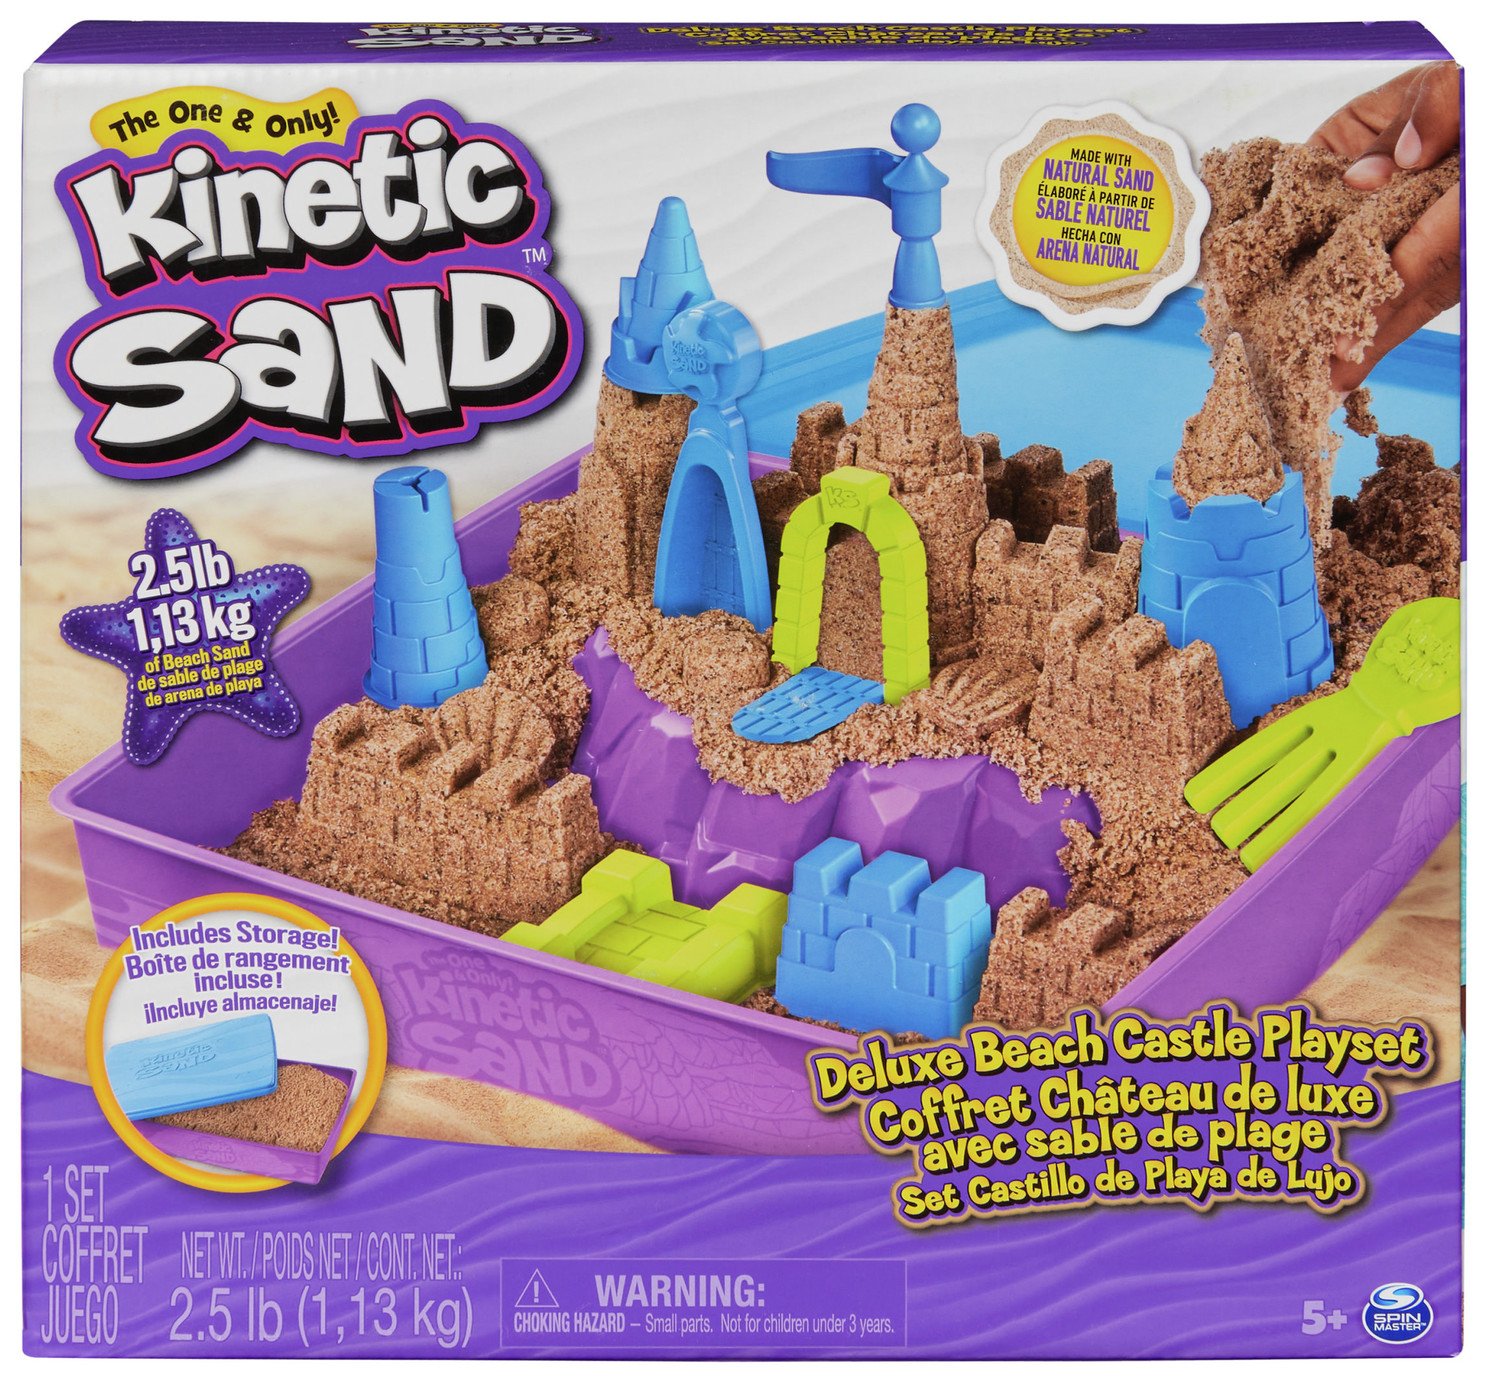 Kinetic Sand Beach Sand Kingdom Playset